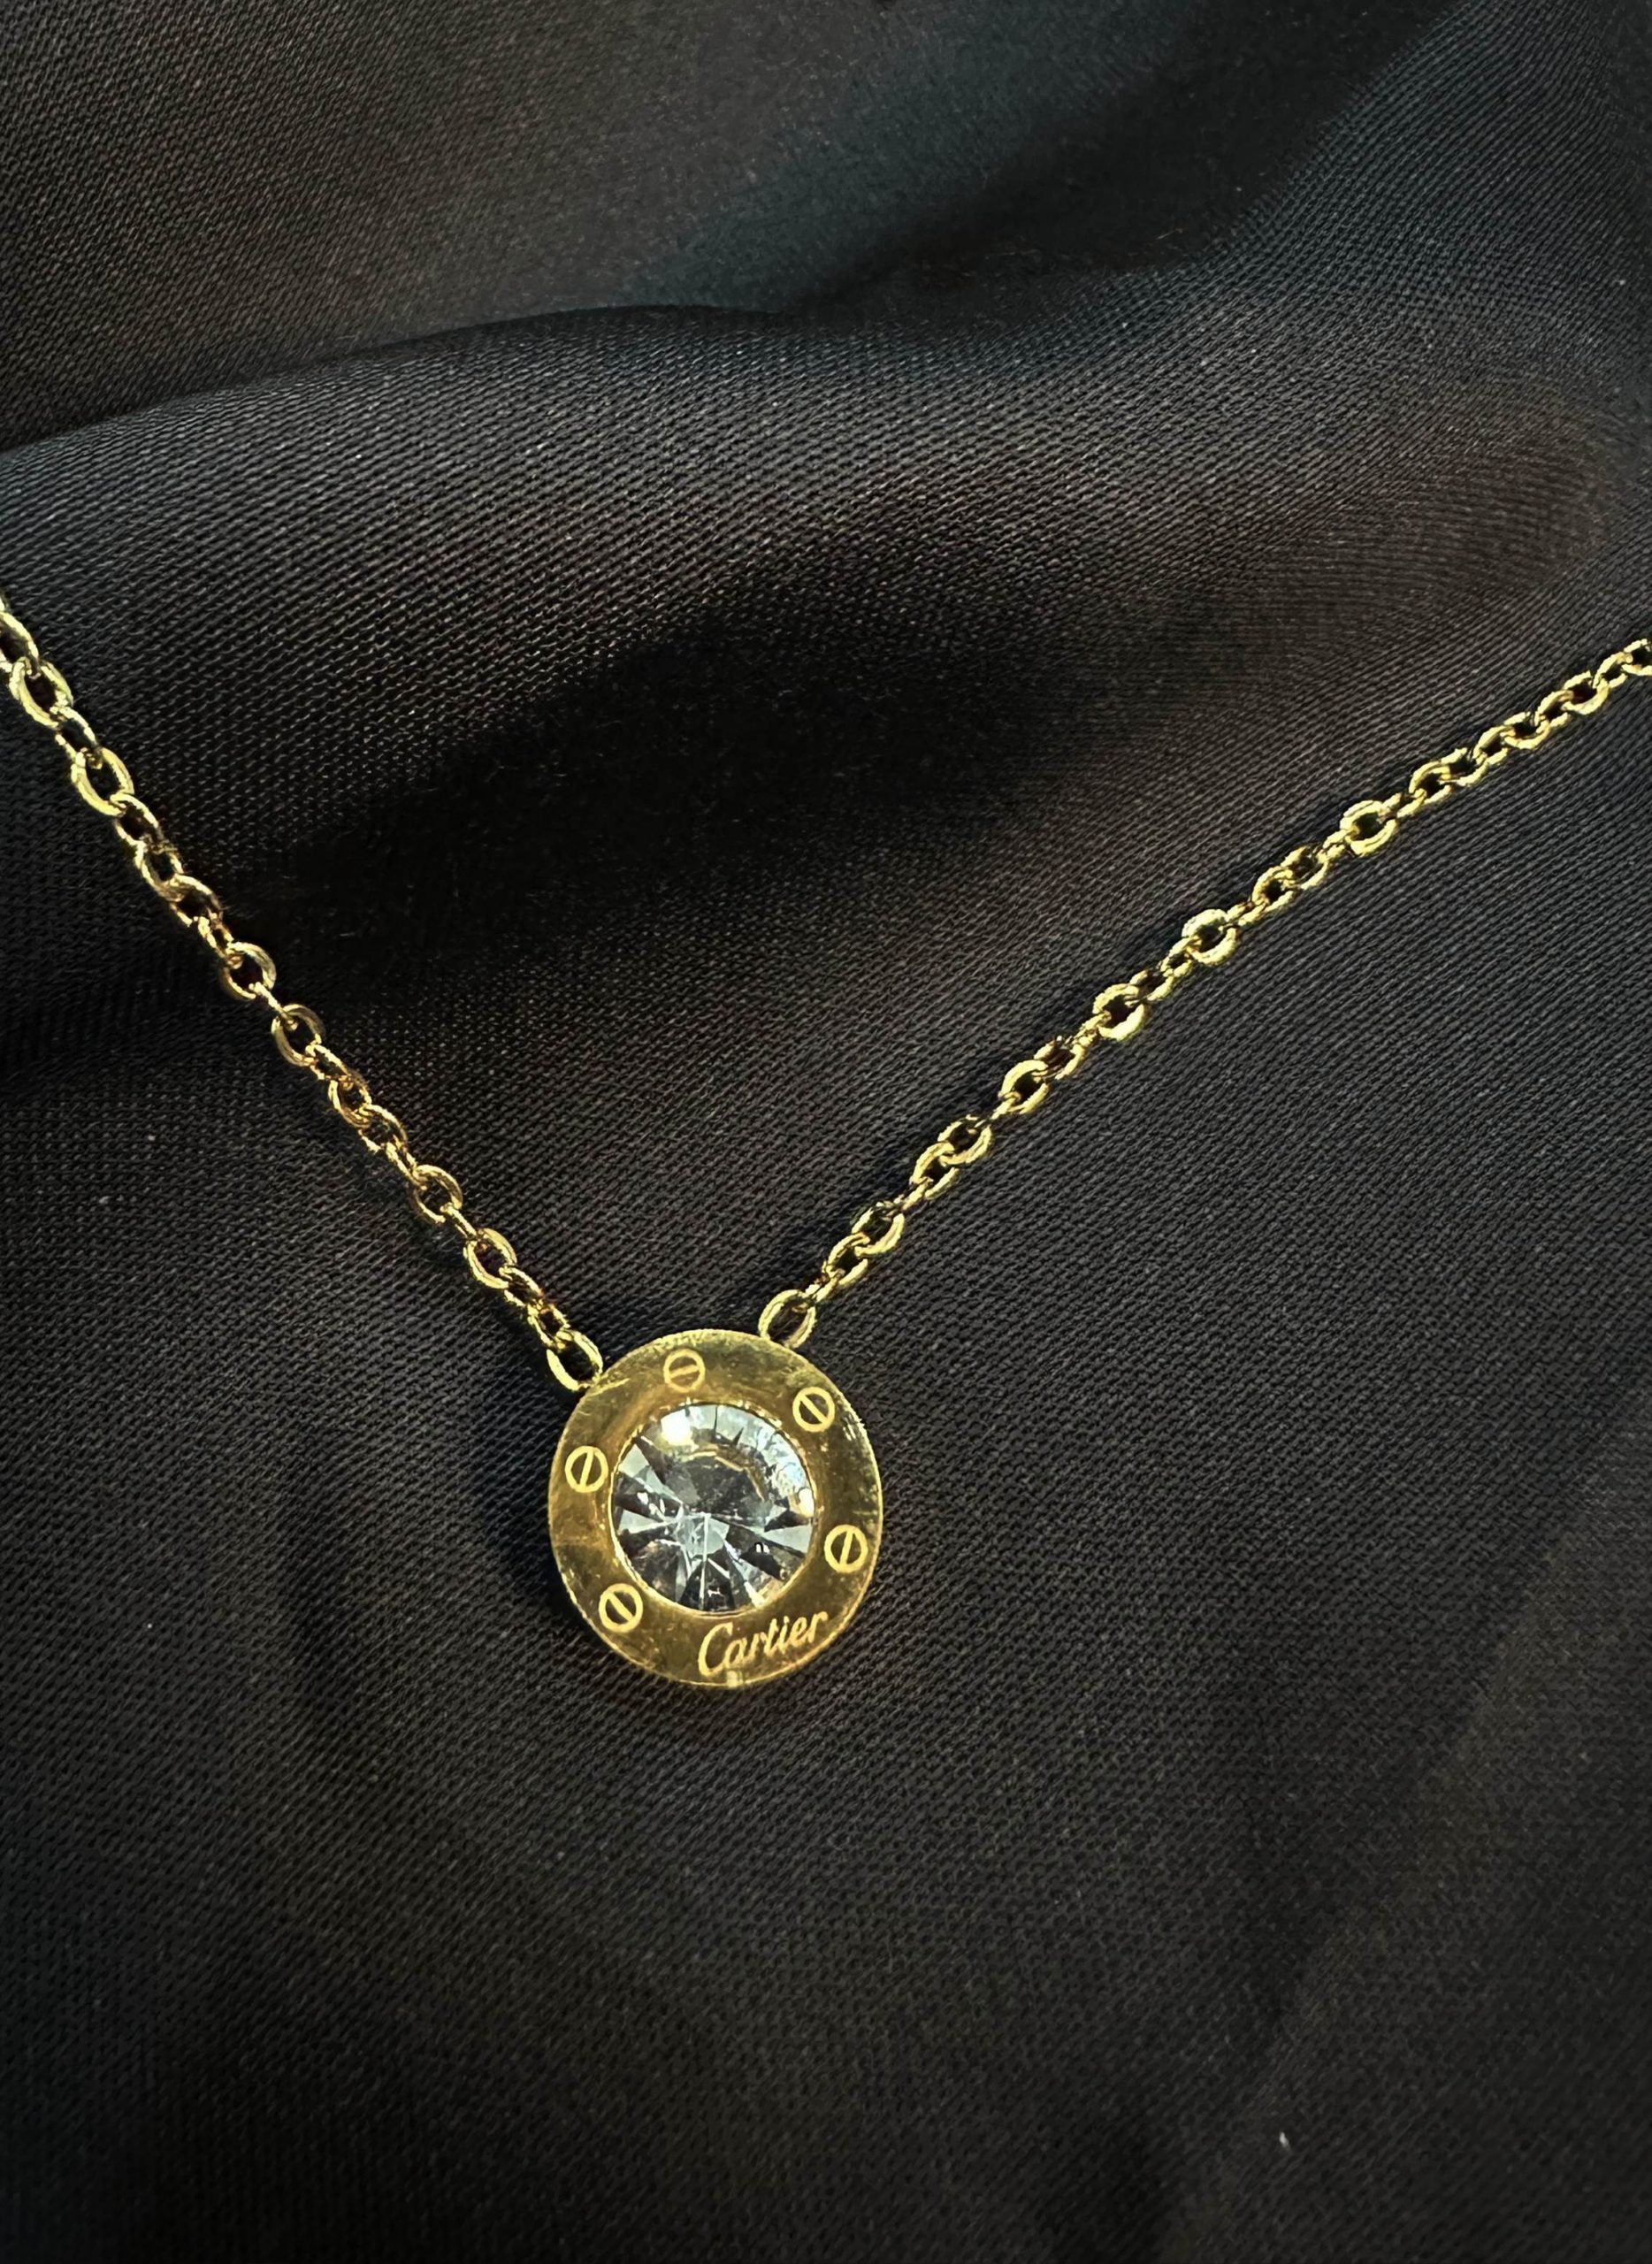 rounded shape pendant with stone